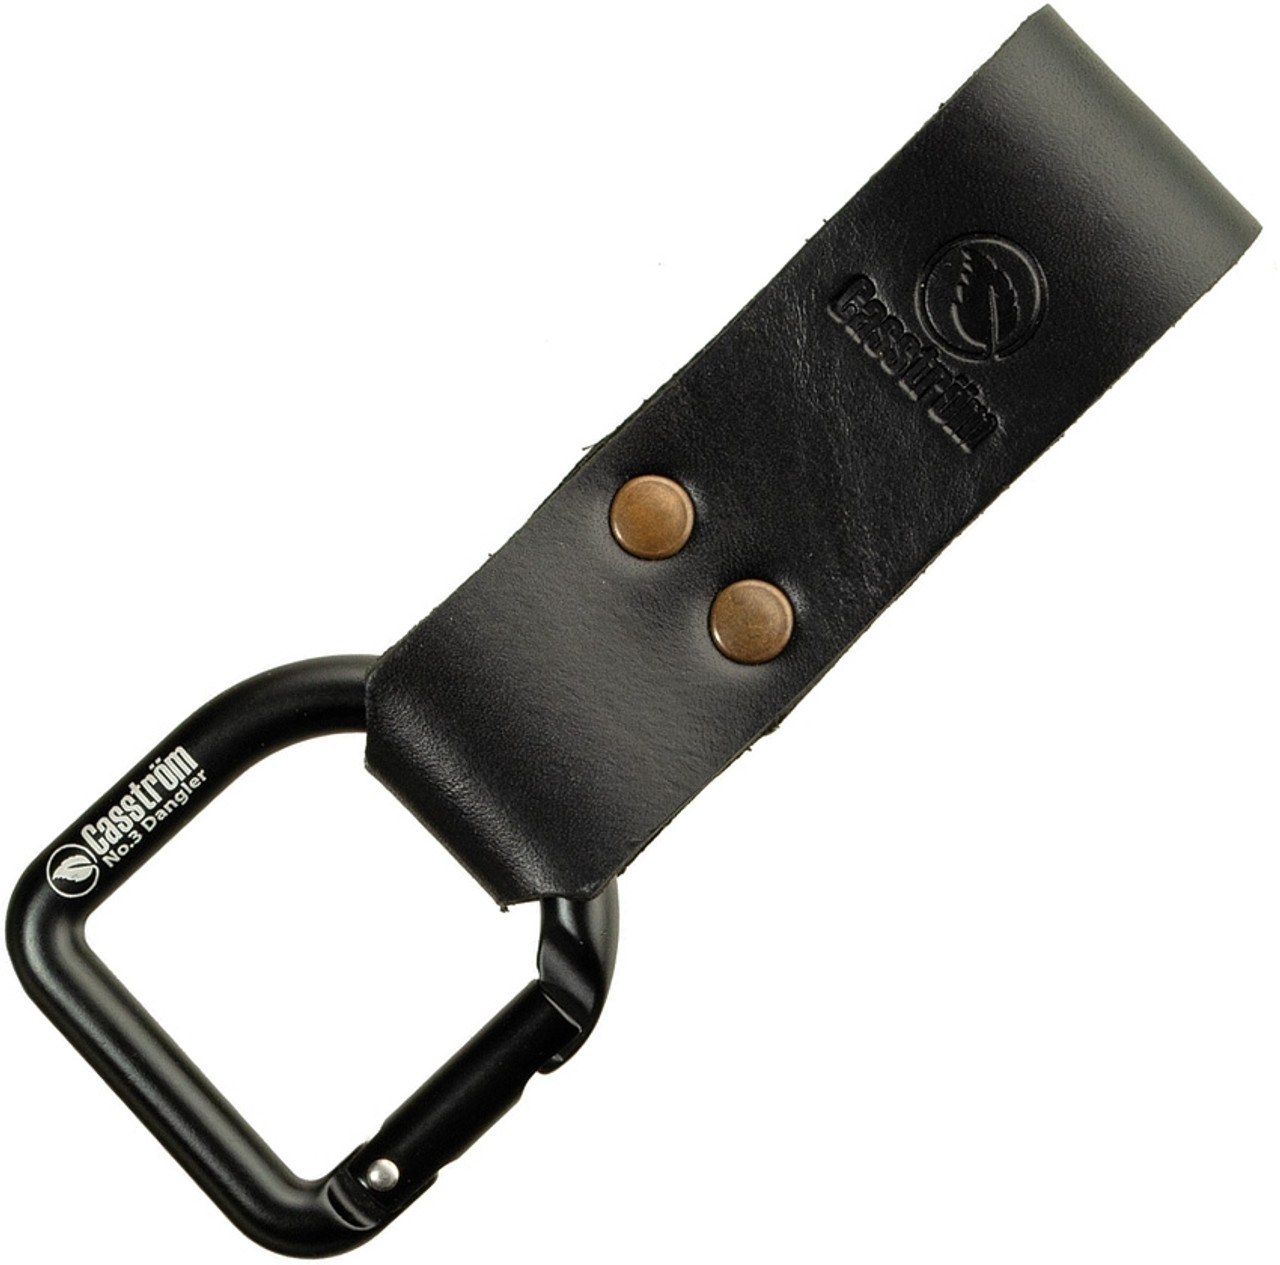 Casstrom No.3 All Black Dangler with Belt Loop